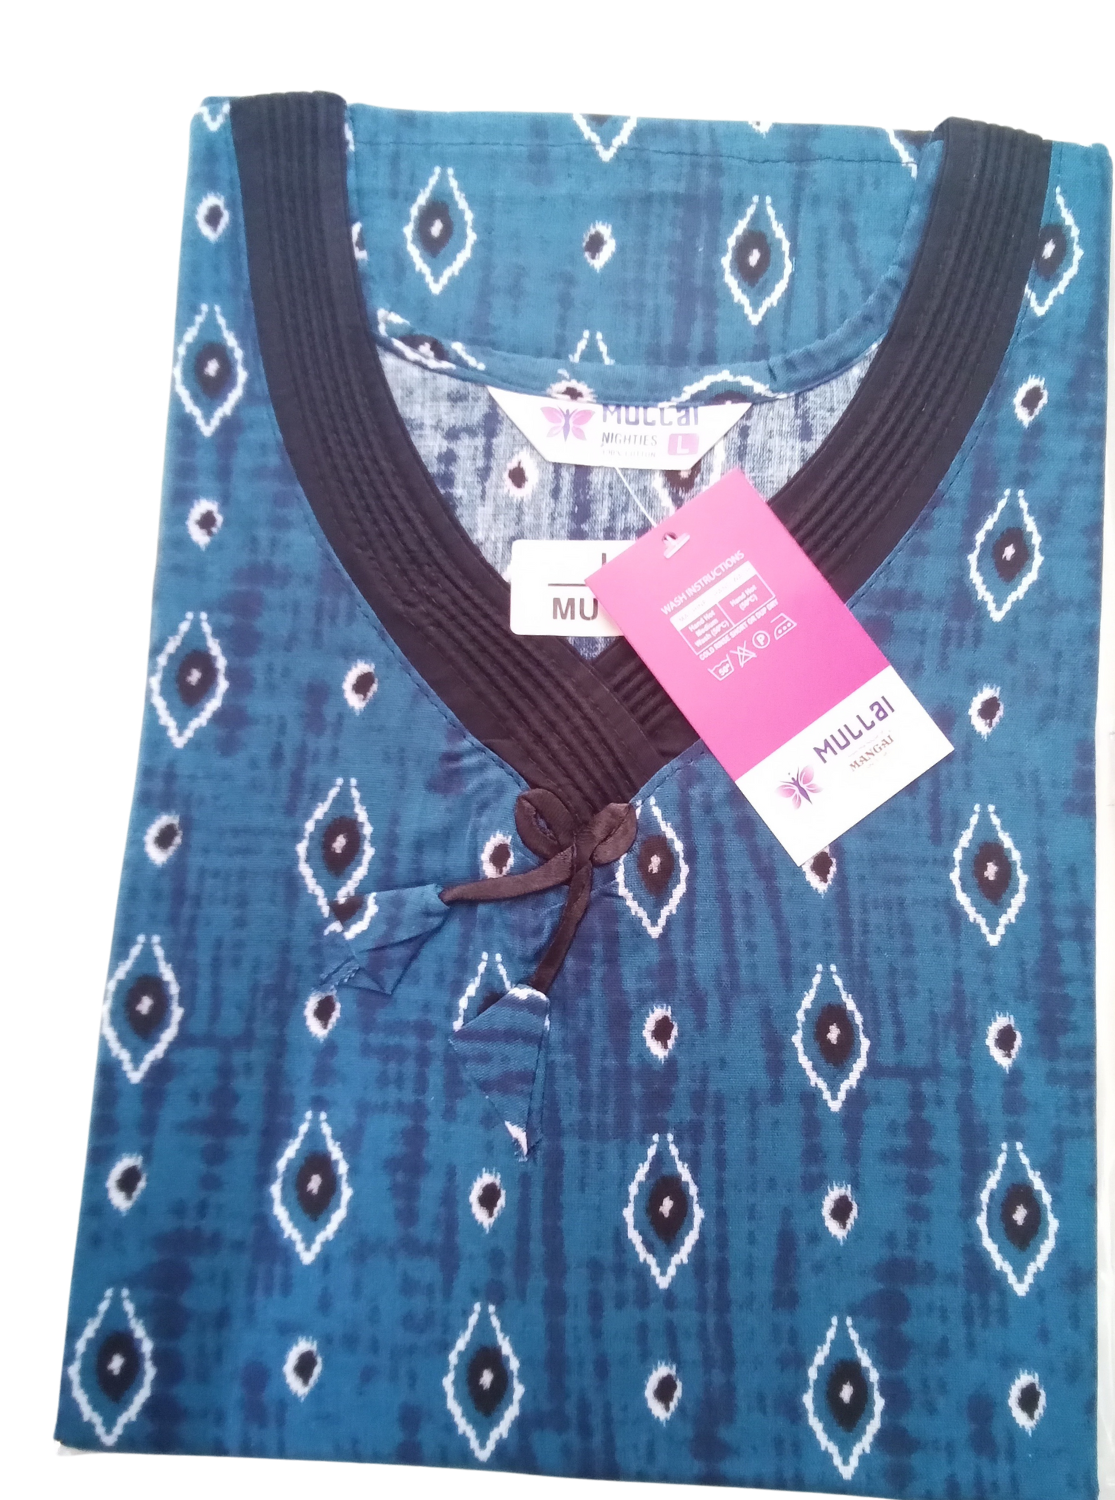 MANGAI New Regular Fit Cotton PrintedNighties - All Over Printed Stylish Nightwear for Stylish Women | Beautiful Nighties for Stylish Women's